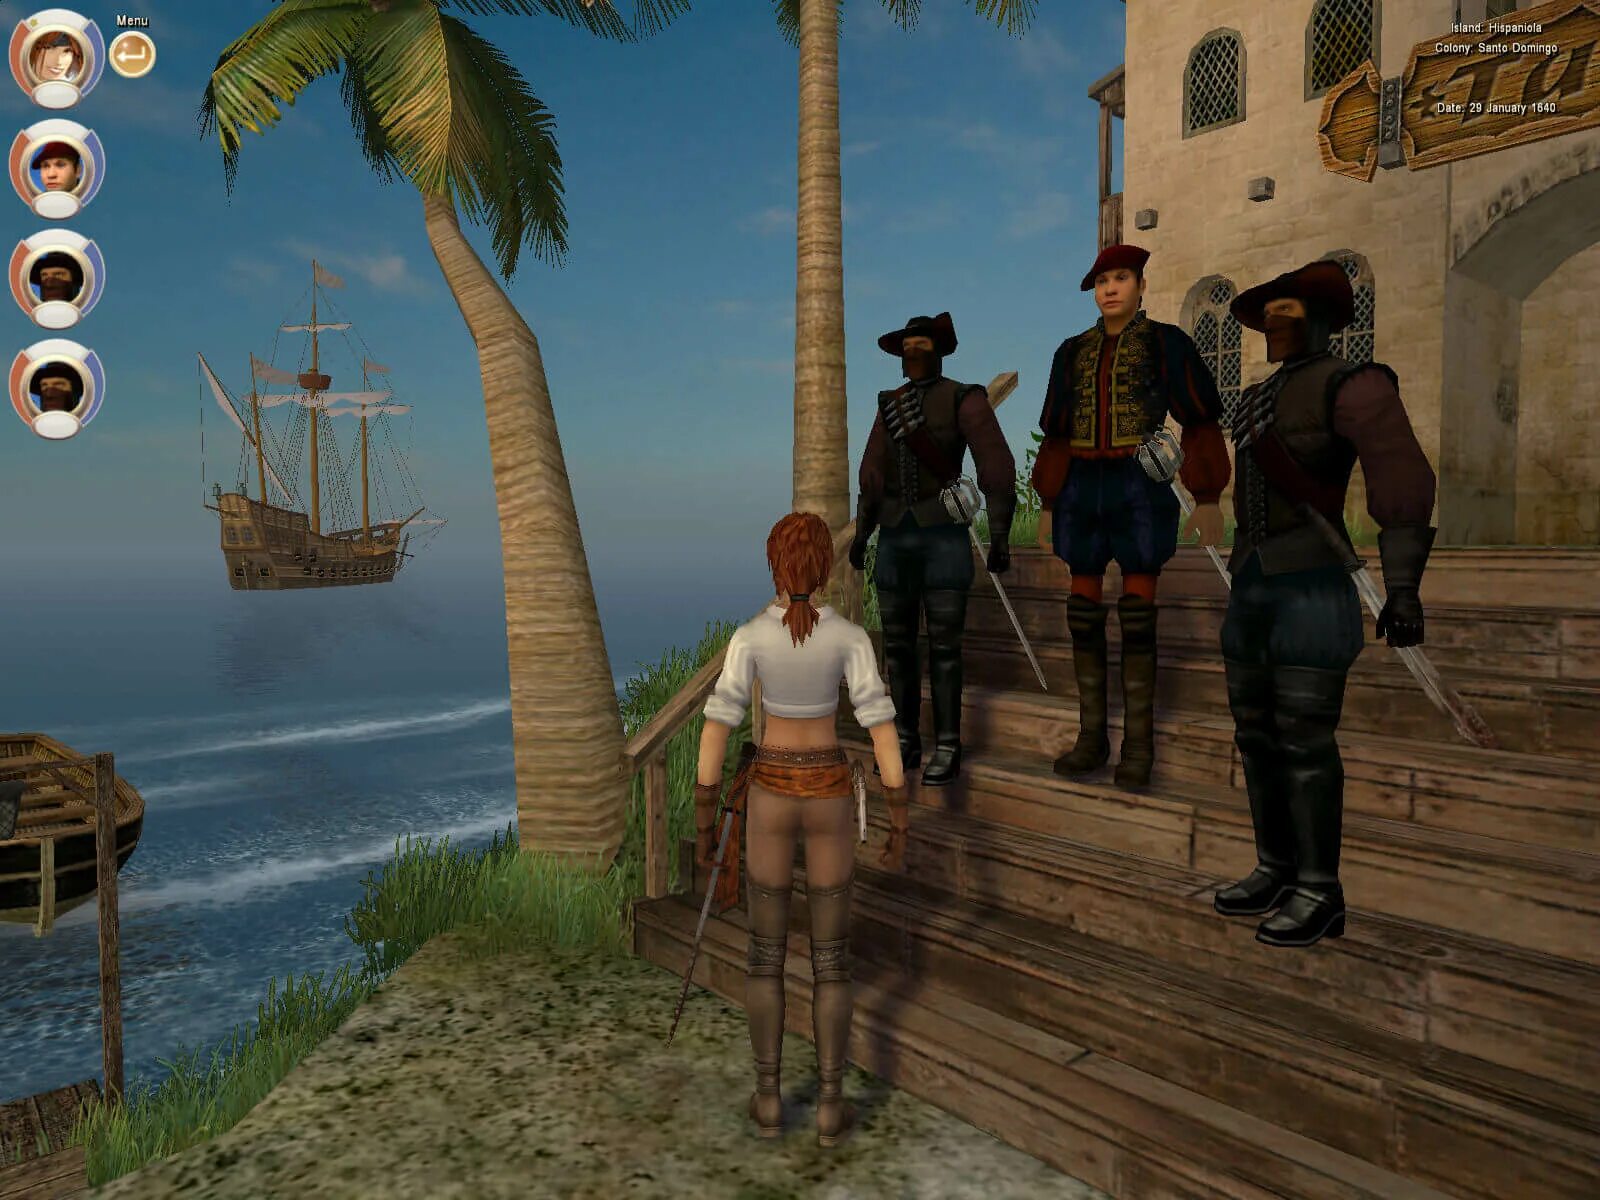 Корсары 3 пираты Карибского моря. Корсары III (2005). Age of Pirates: Caribbean Tales игра. Корсары пираты Карибского моря игра. Игры про пиратов с открытым миром